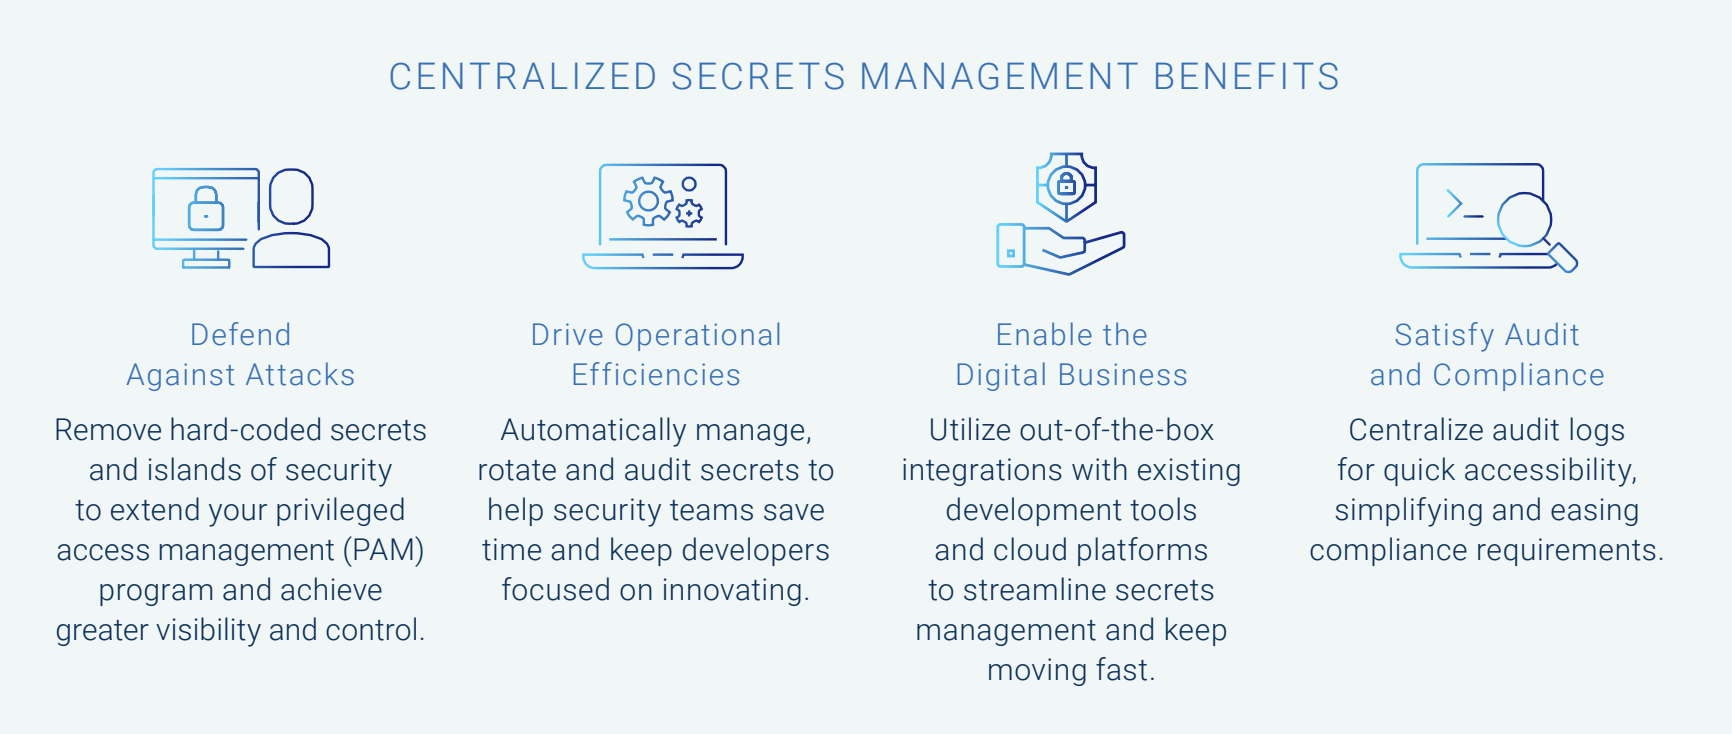 4 reasons to centralize secrets management